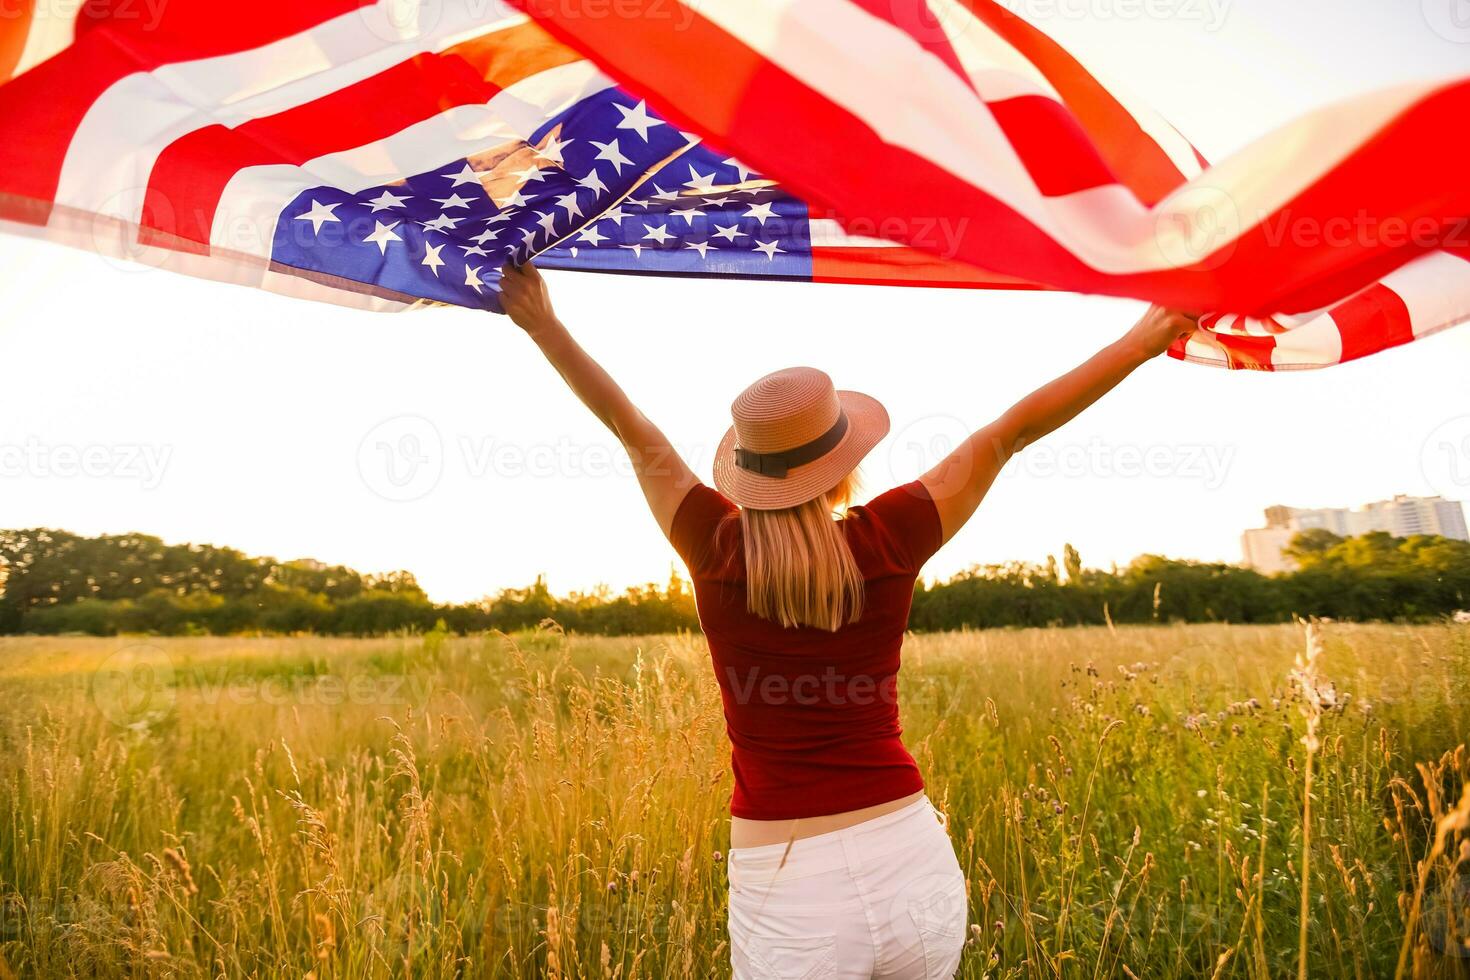 schön jung Frau mit USA Flagge foto